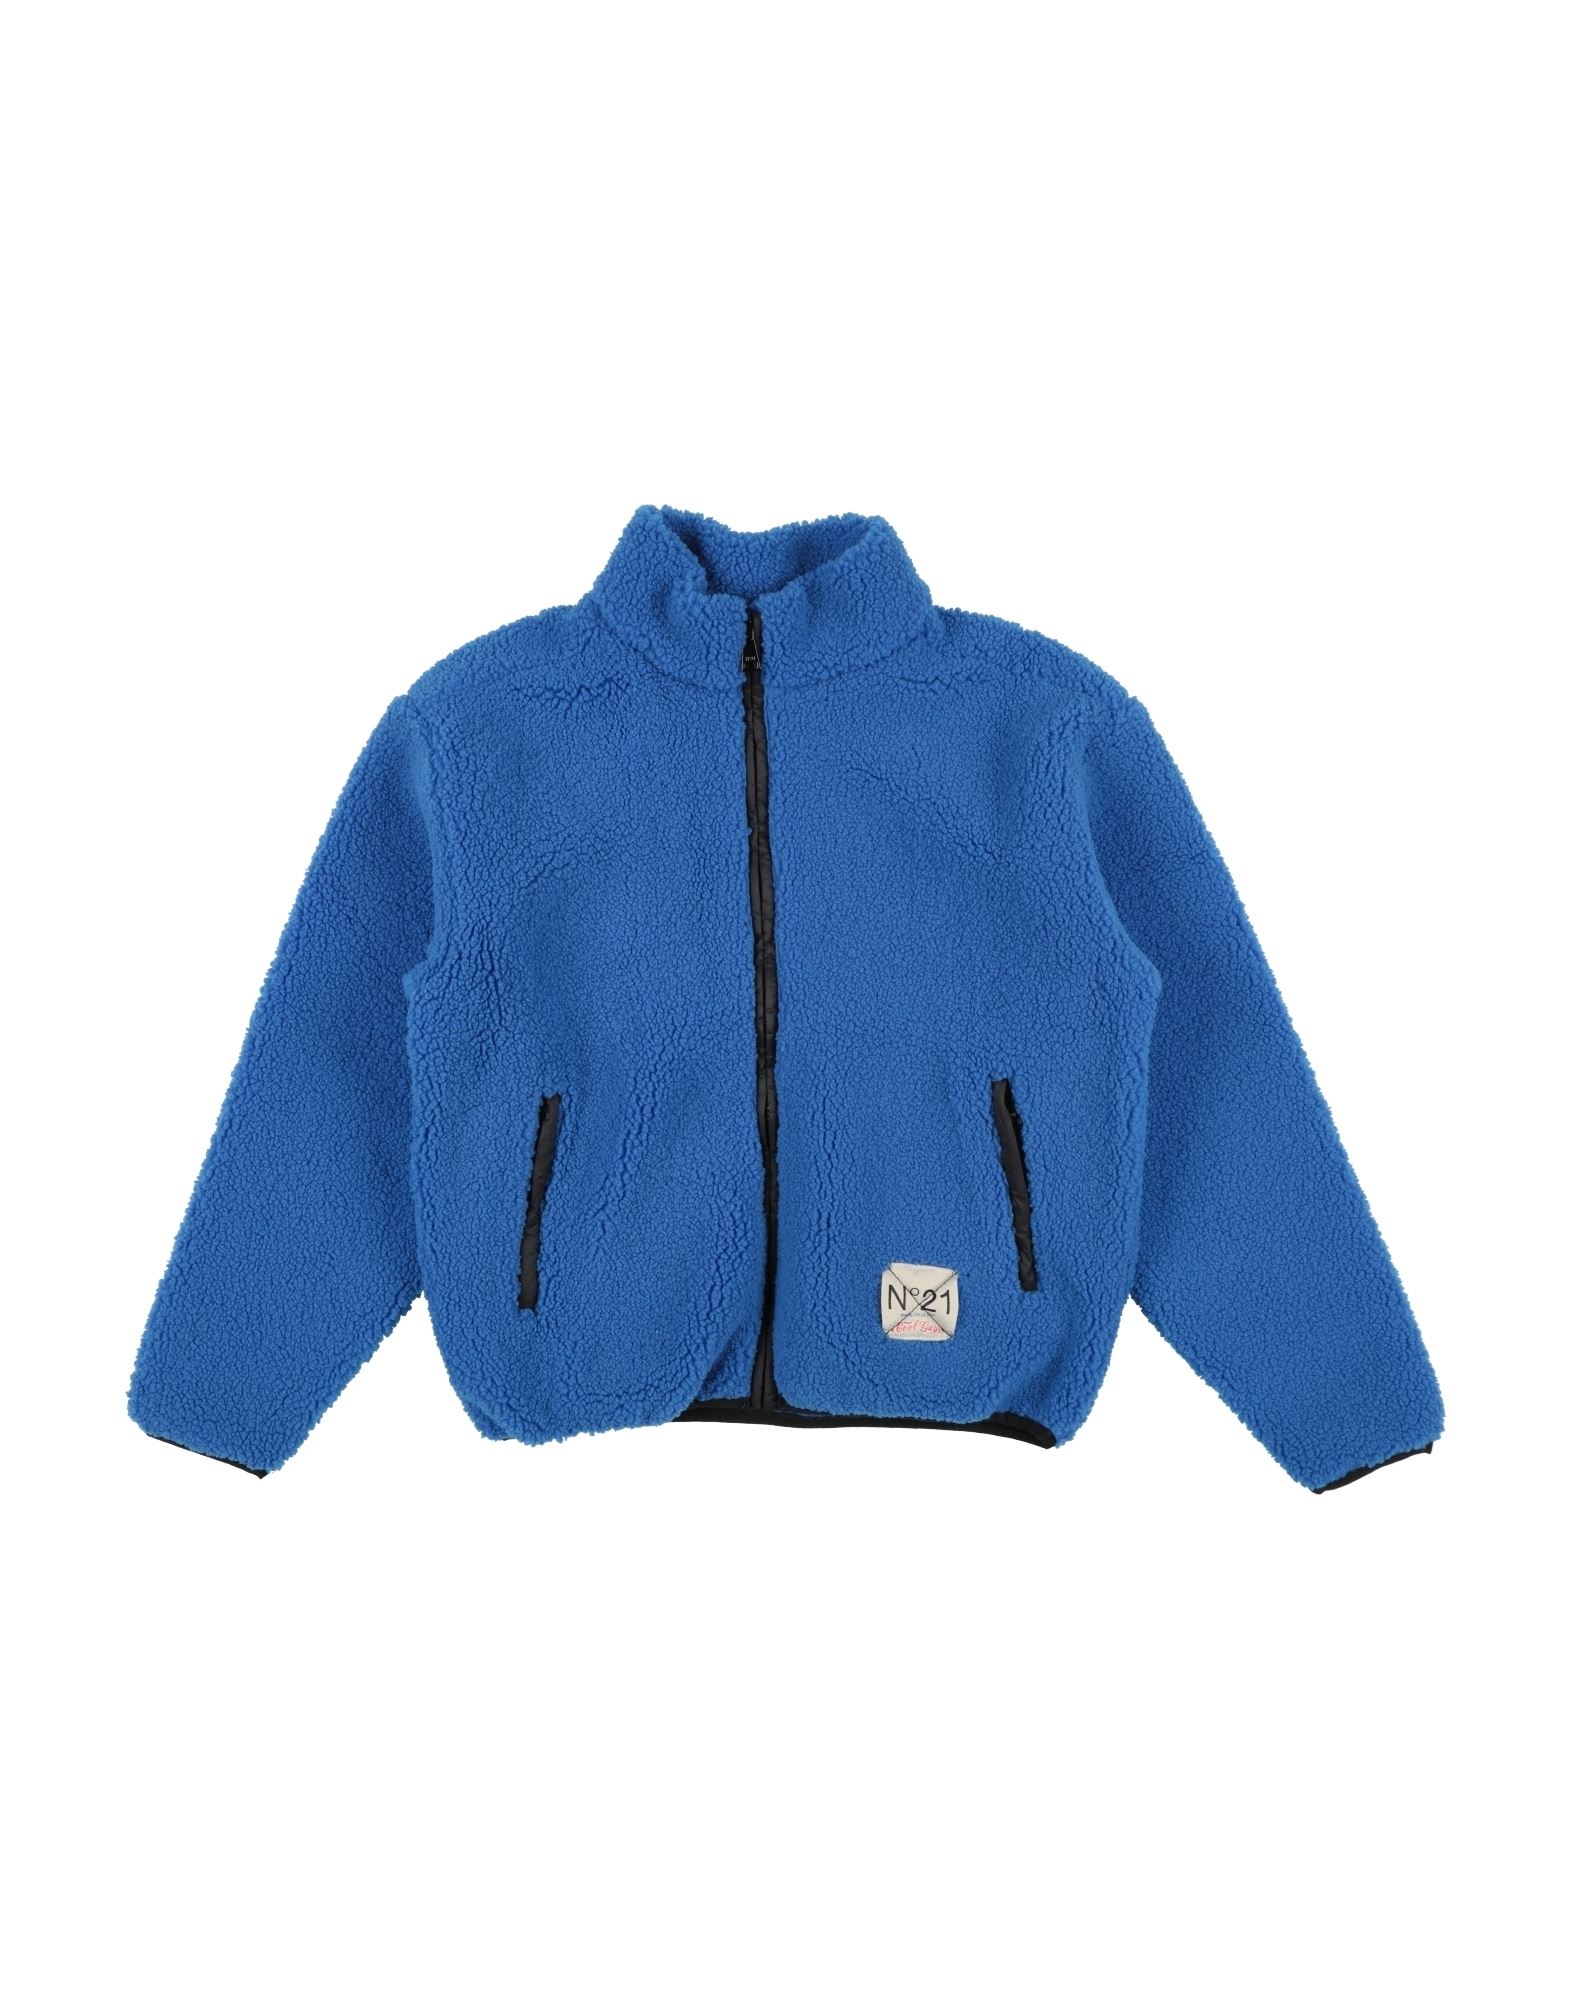 N°21 Sweatshirt Kinder Blau von N°21